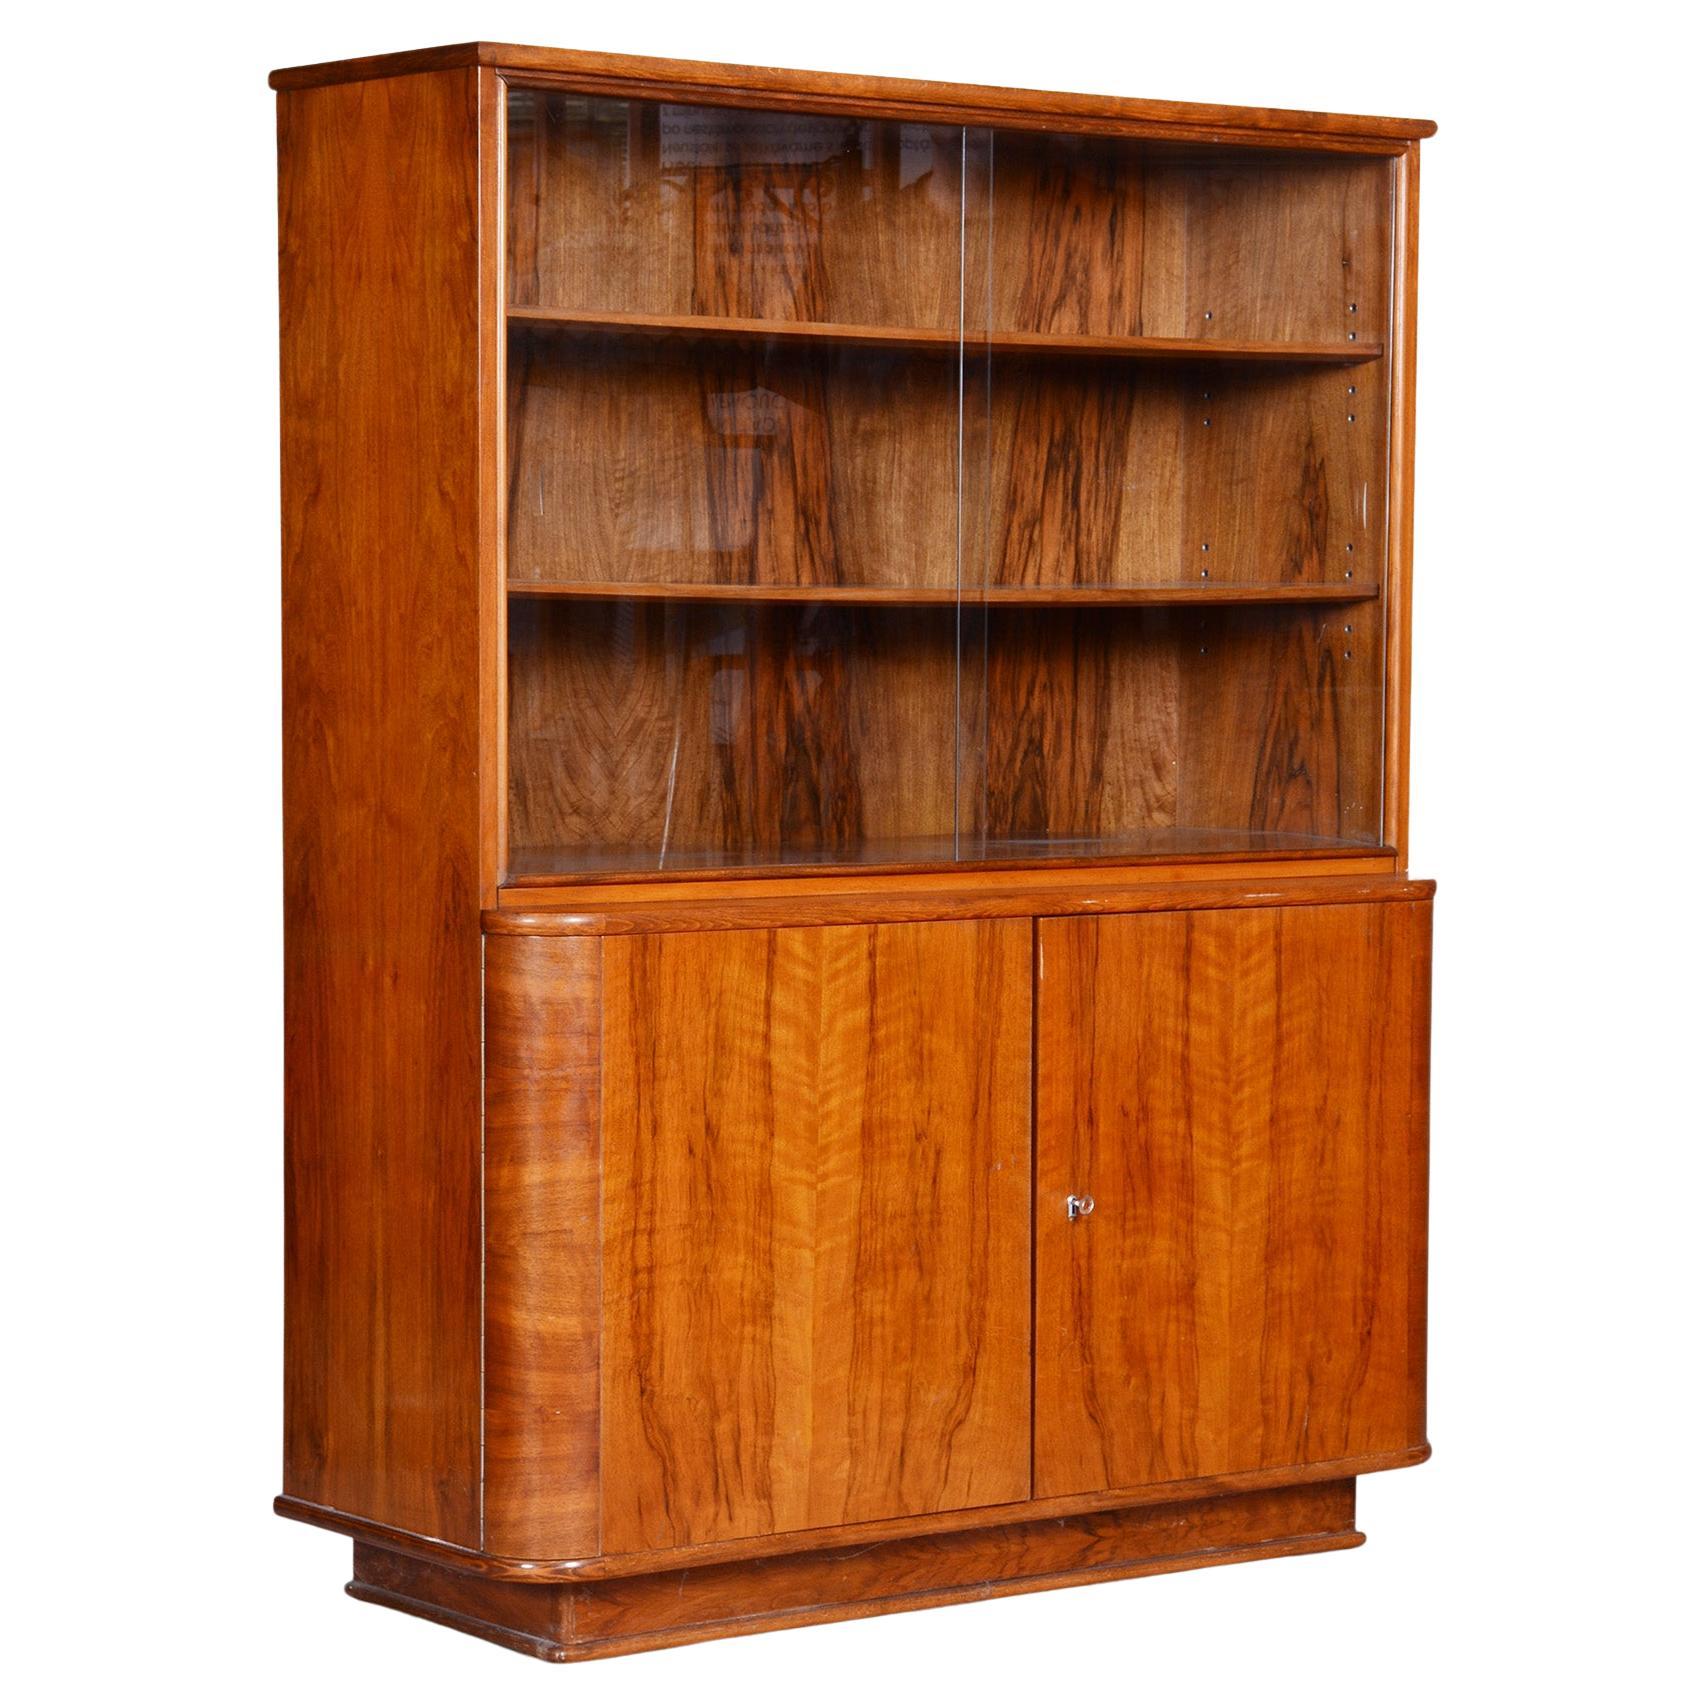 Art Deco Walnut Bookcase, Well-Preserved Original Condition, Czechia, 1950s For Sale